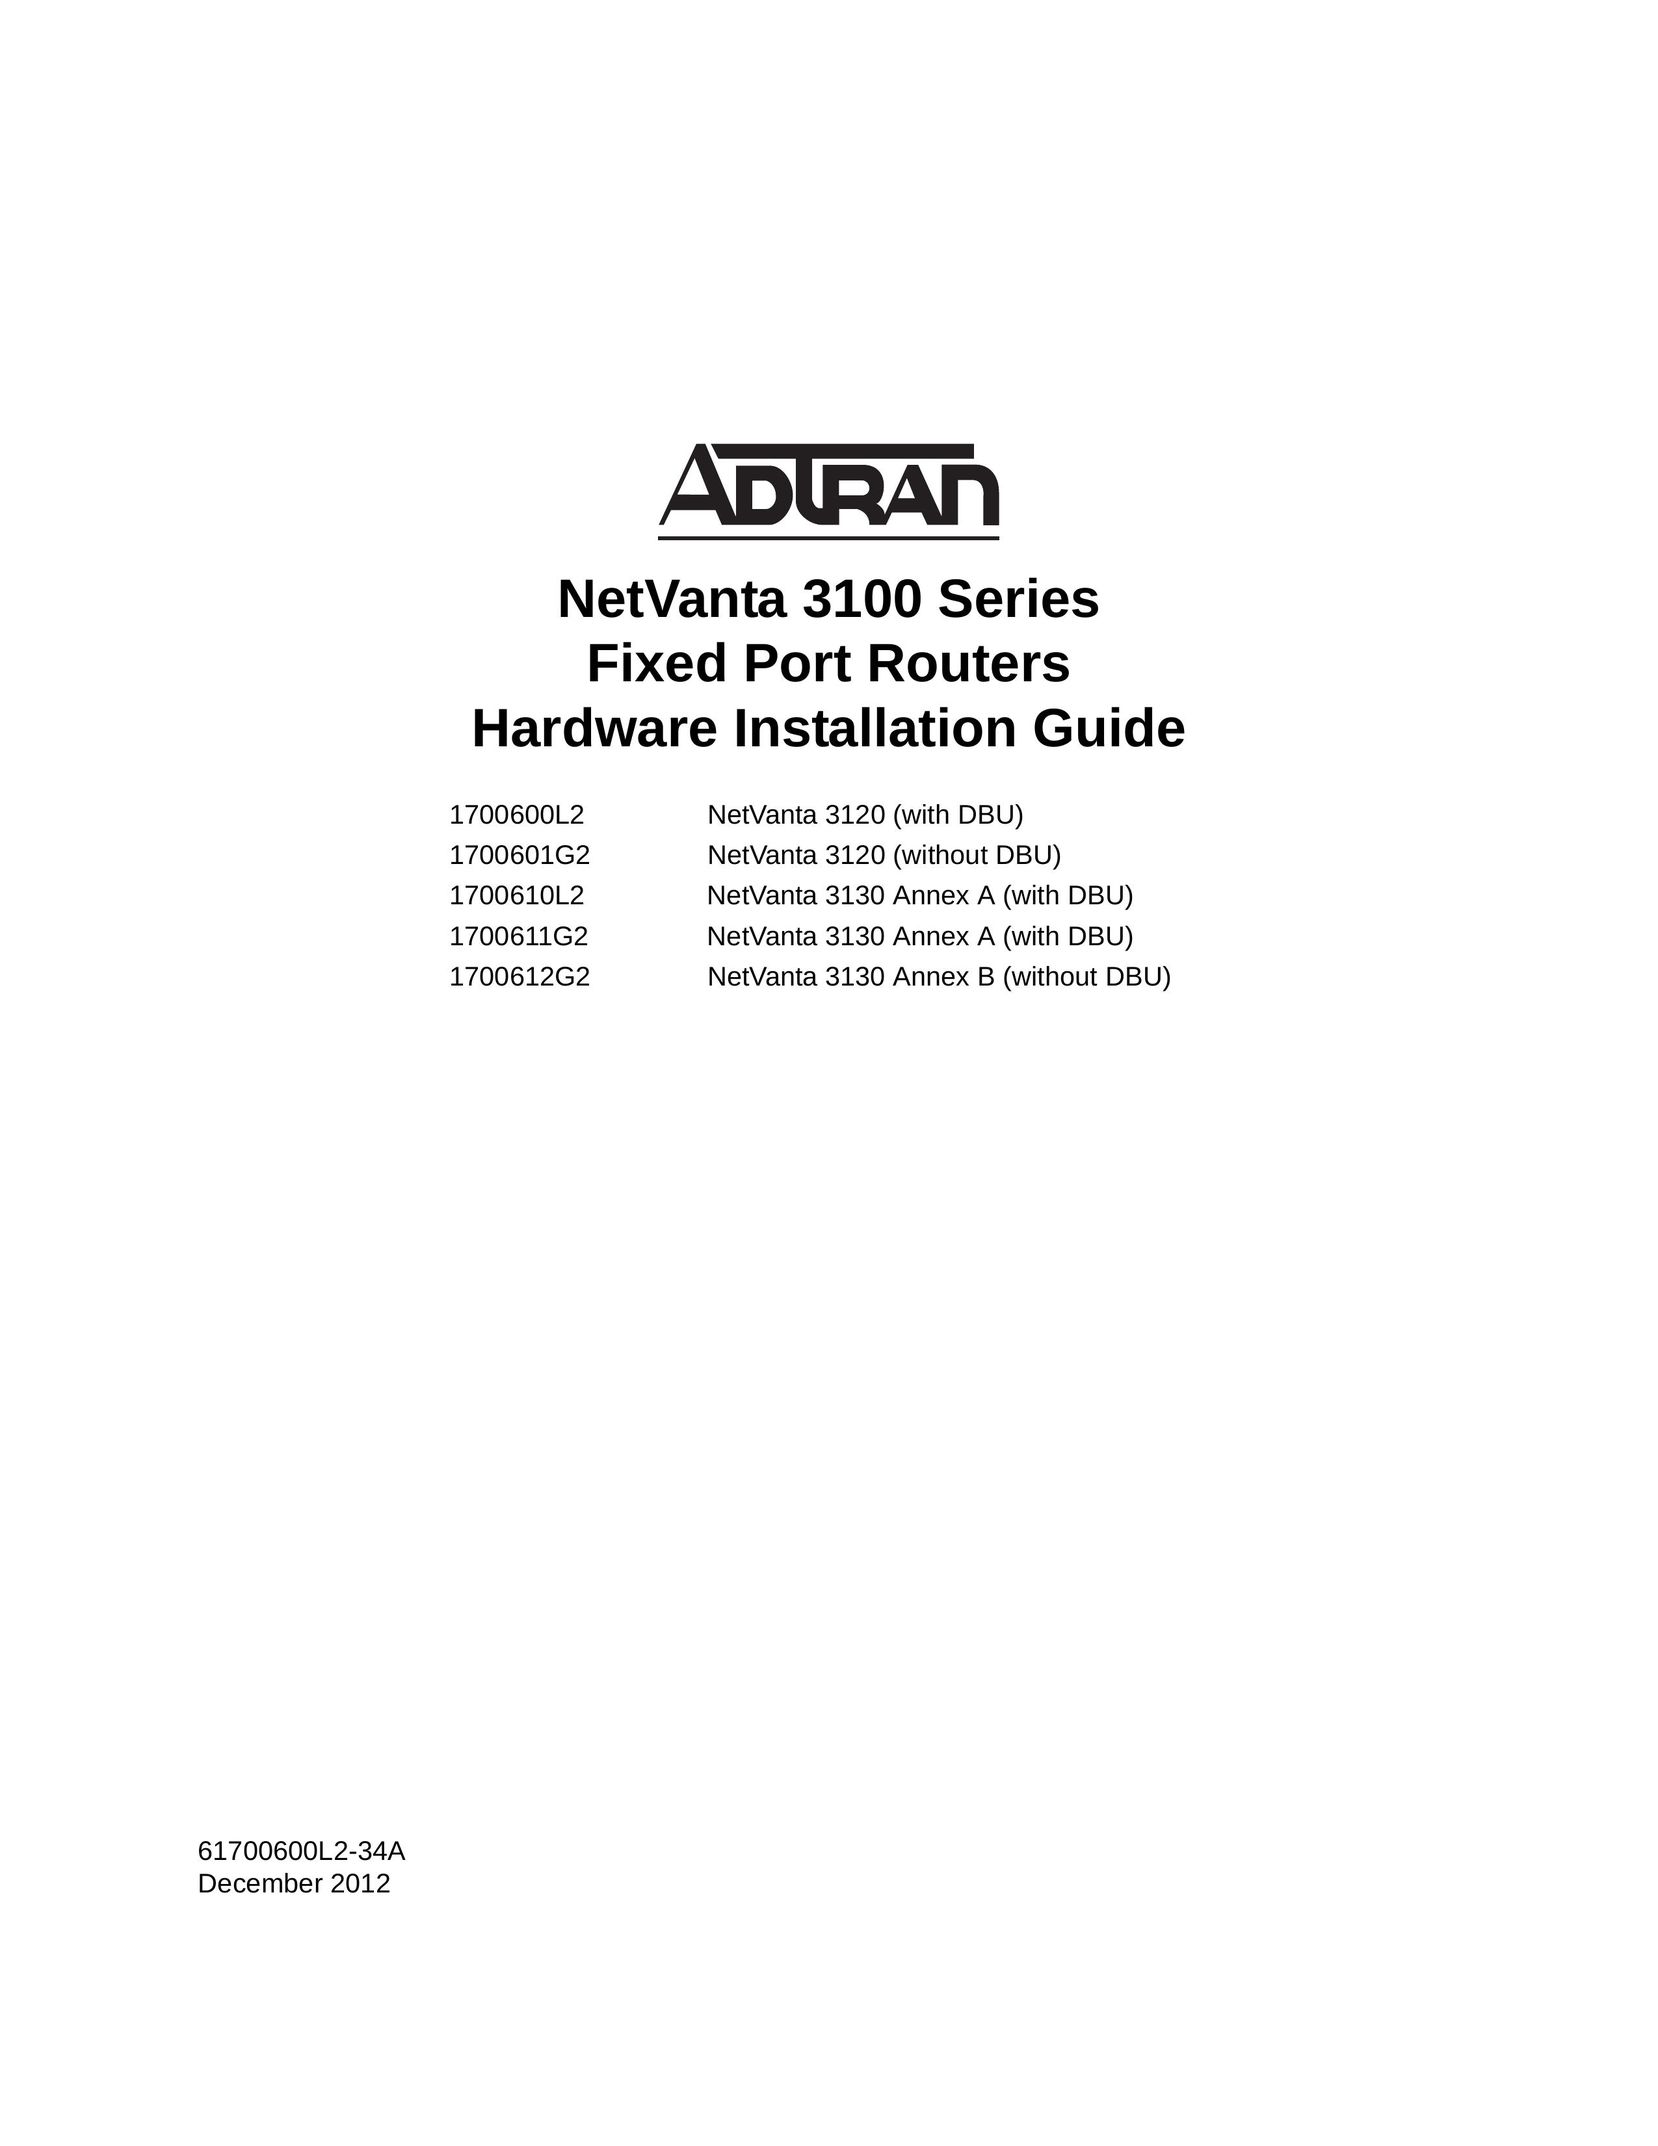 ADTRAN 1700600L2 Network Router User Manual